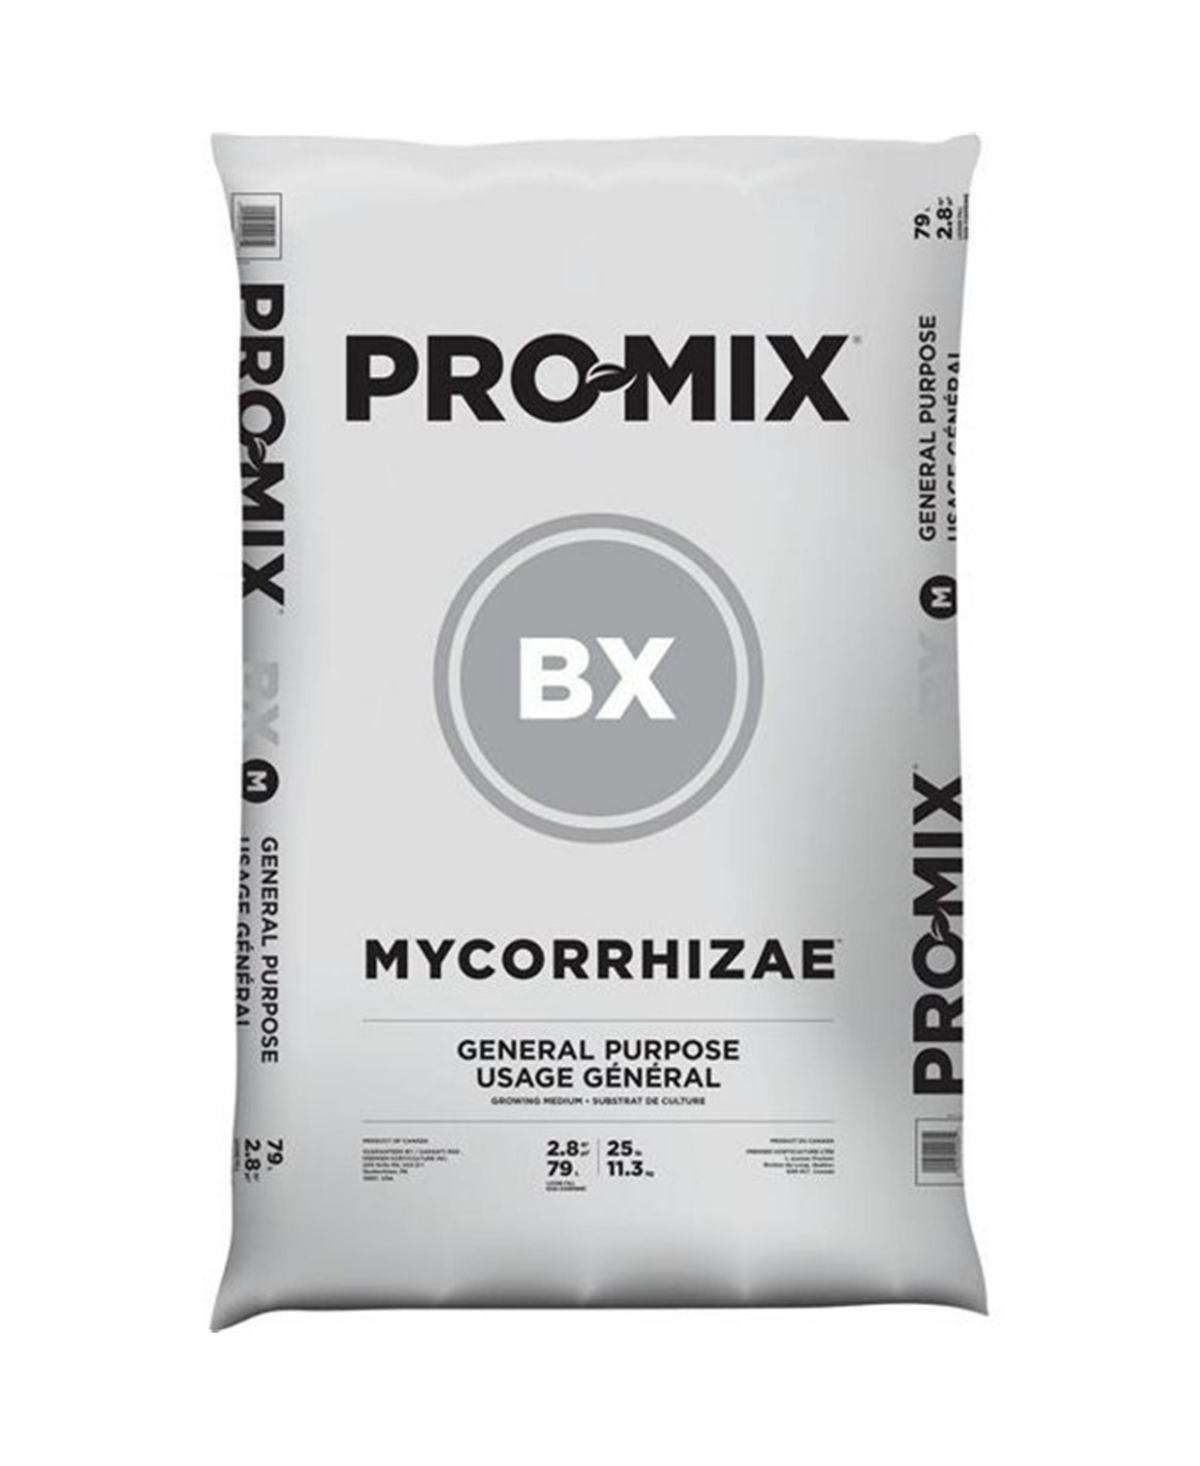 Pro-mix Mycorrhizae General Grower Mix, 2.8CF - Multi